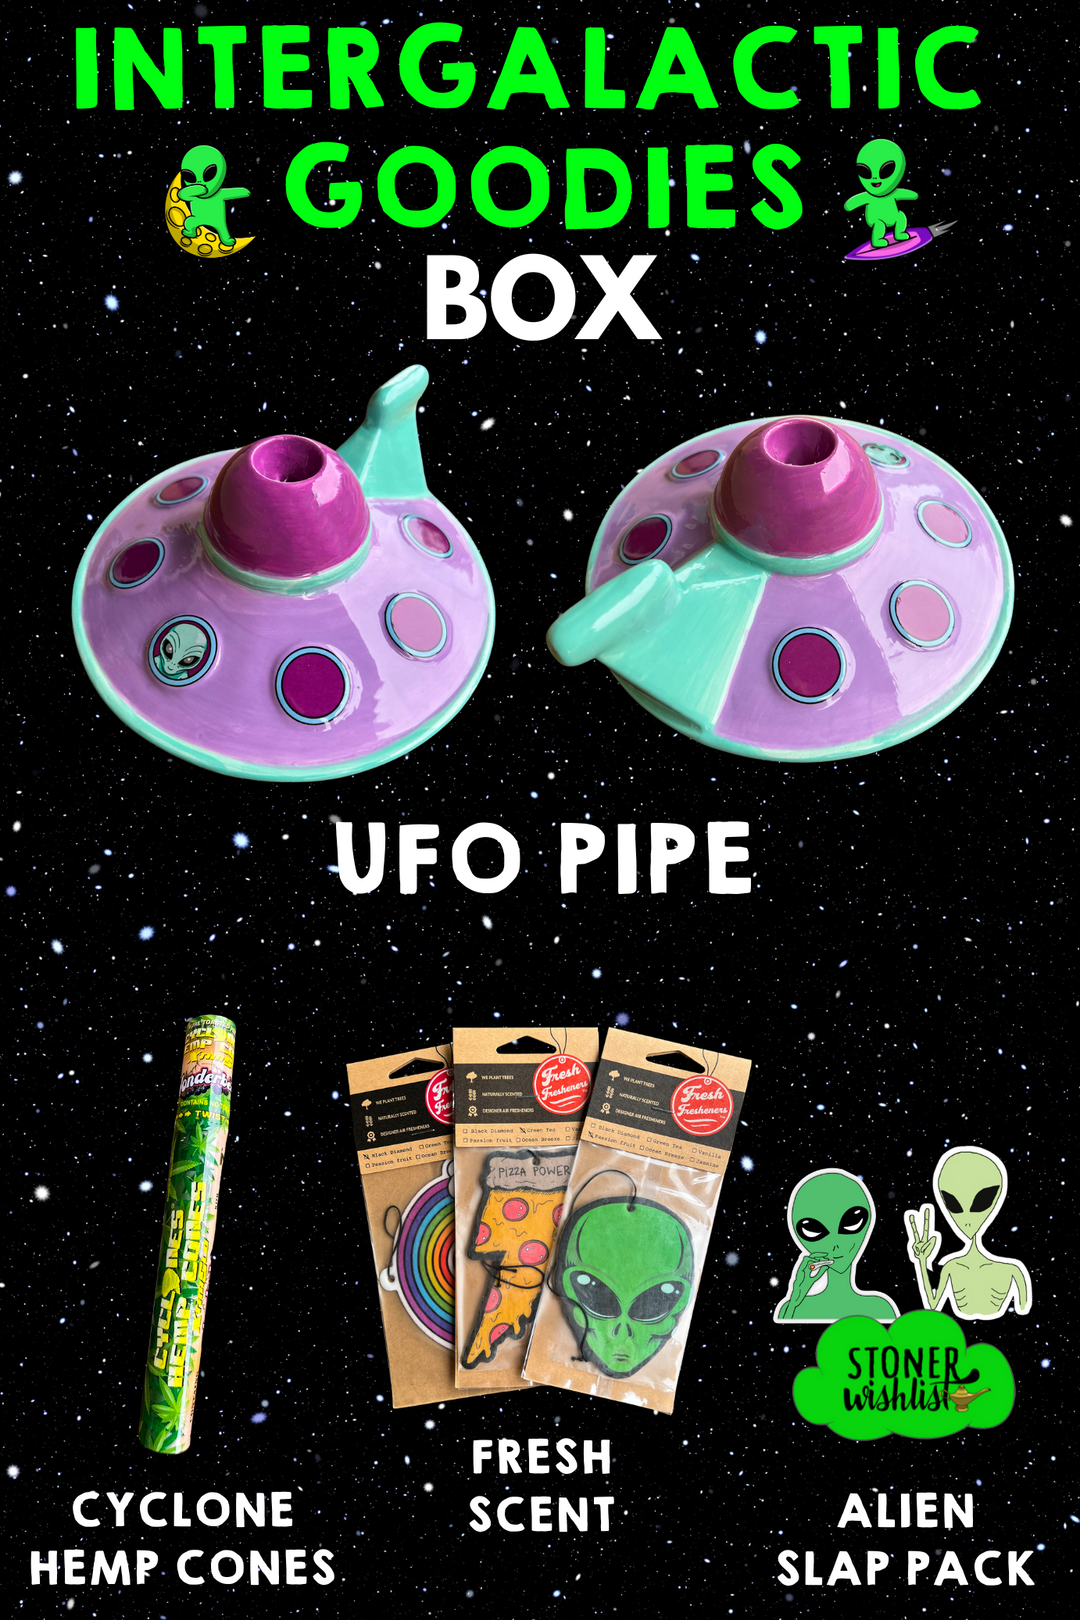 Intergalactic Goodies Box